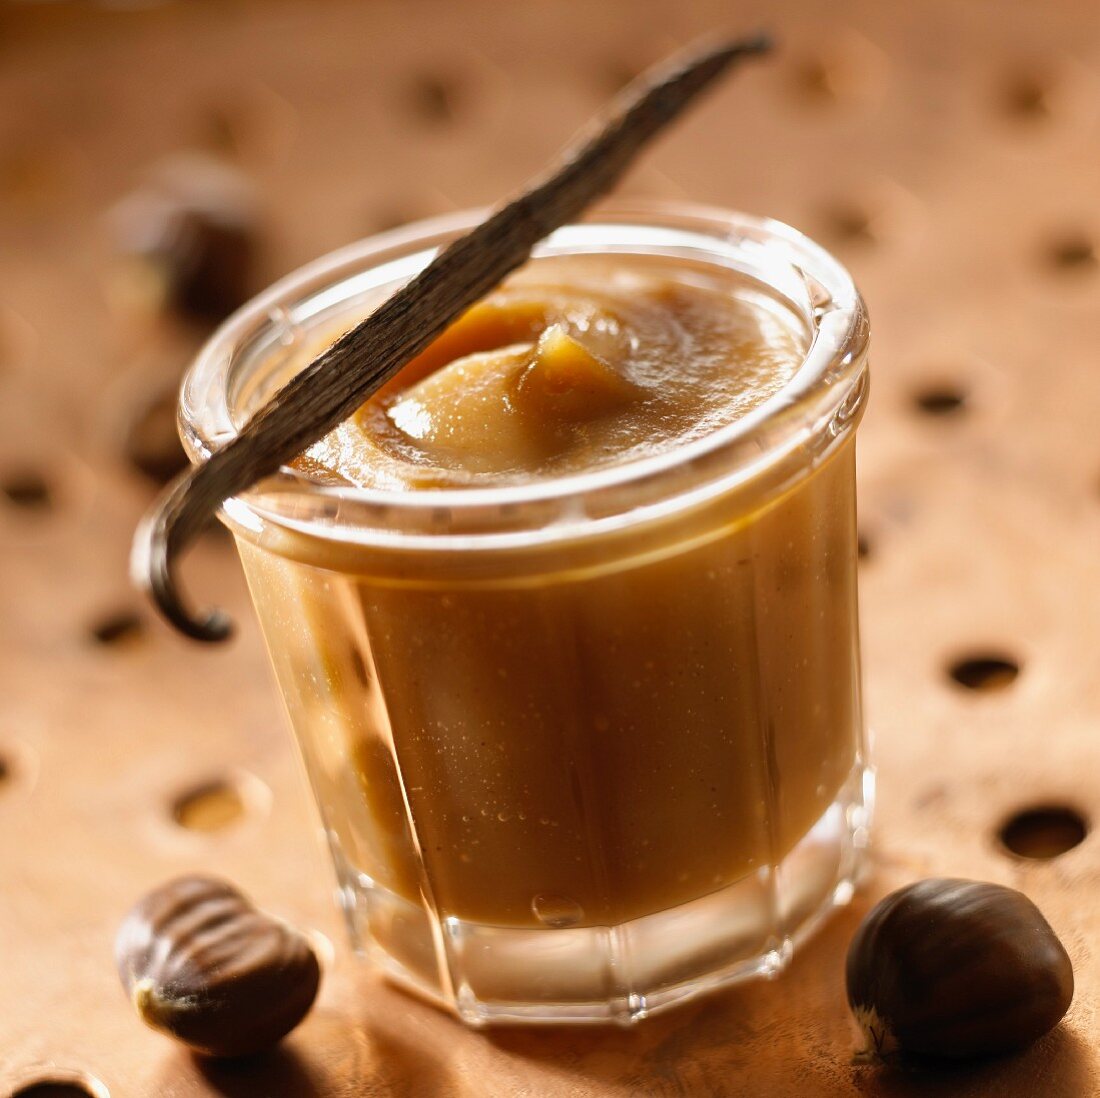 Vanilla-flavored chestnut cream